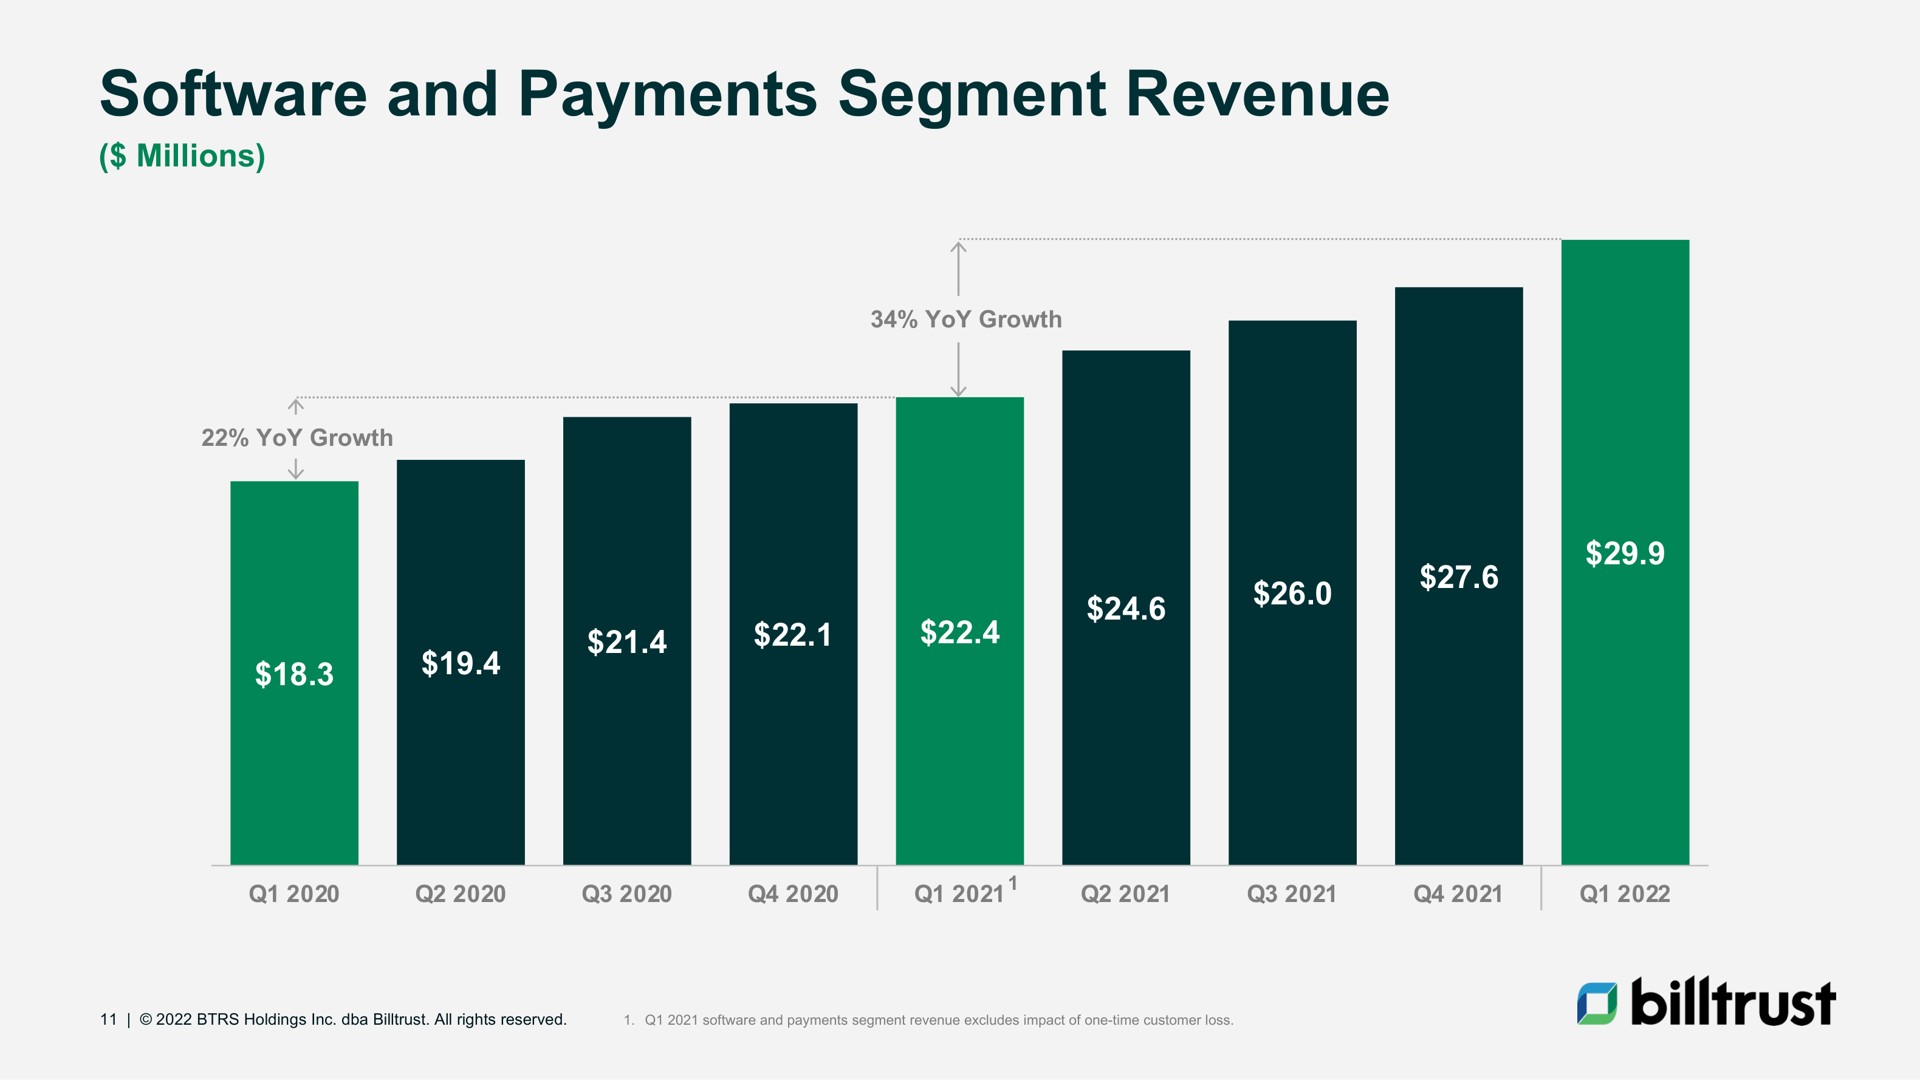 and payments segment revenue | Billtrust